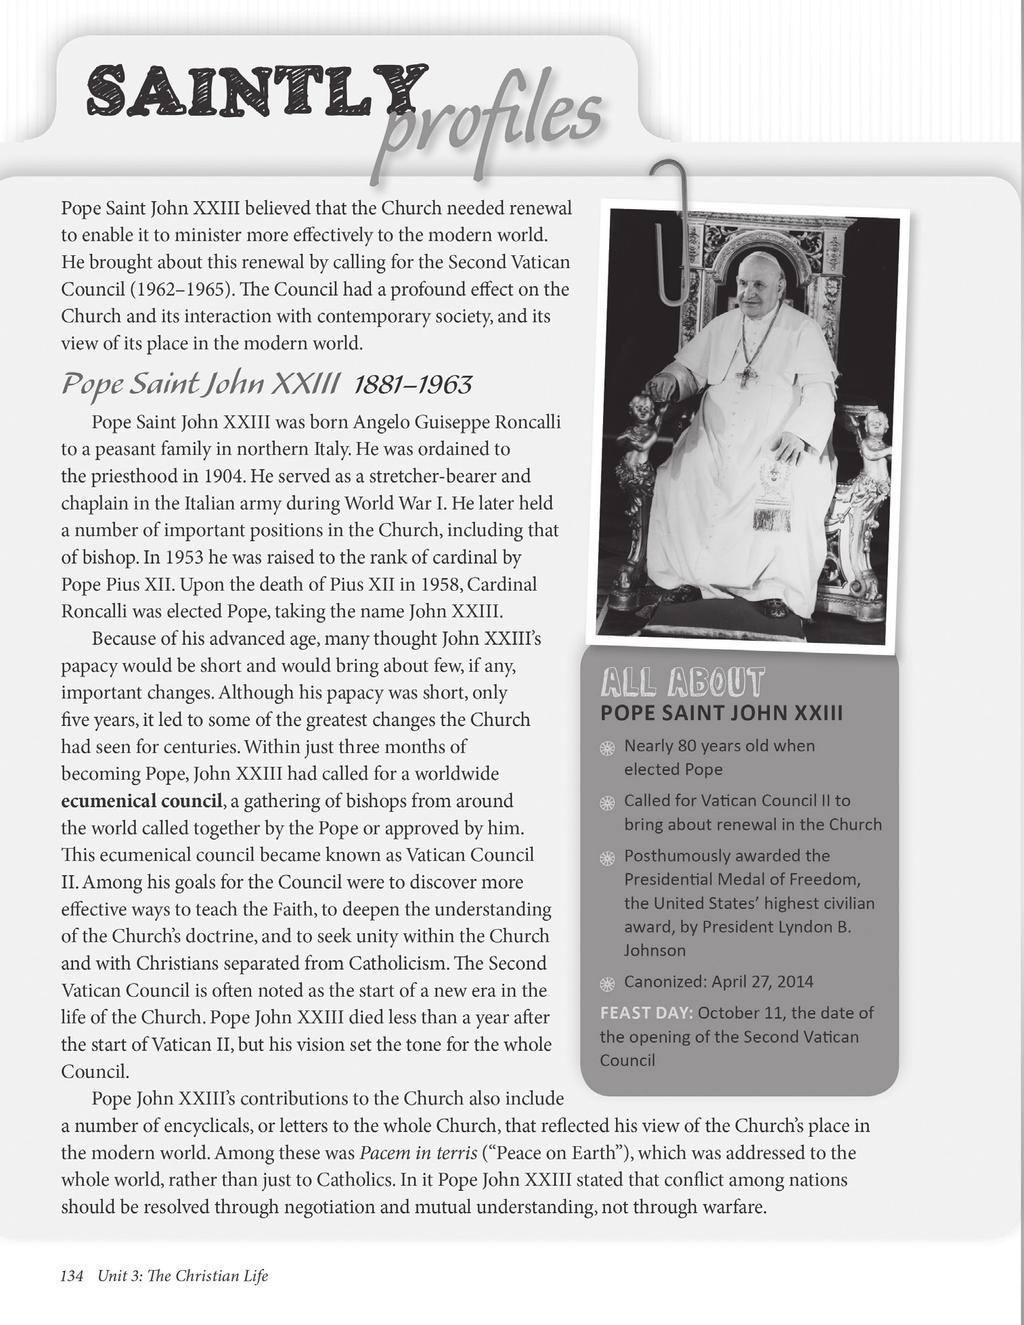 Saintly Profiles Pope Saint John XXIII Read aloud the introduction. Then invite a volunteer to read aloud the story of Pope Saint John XXIII.